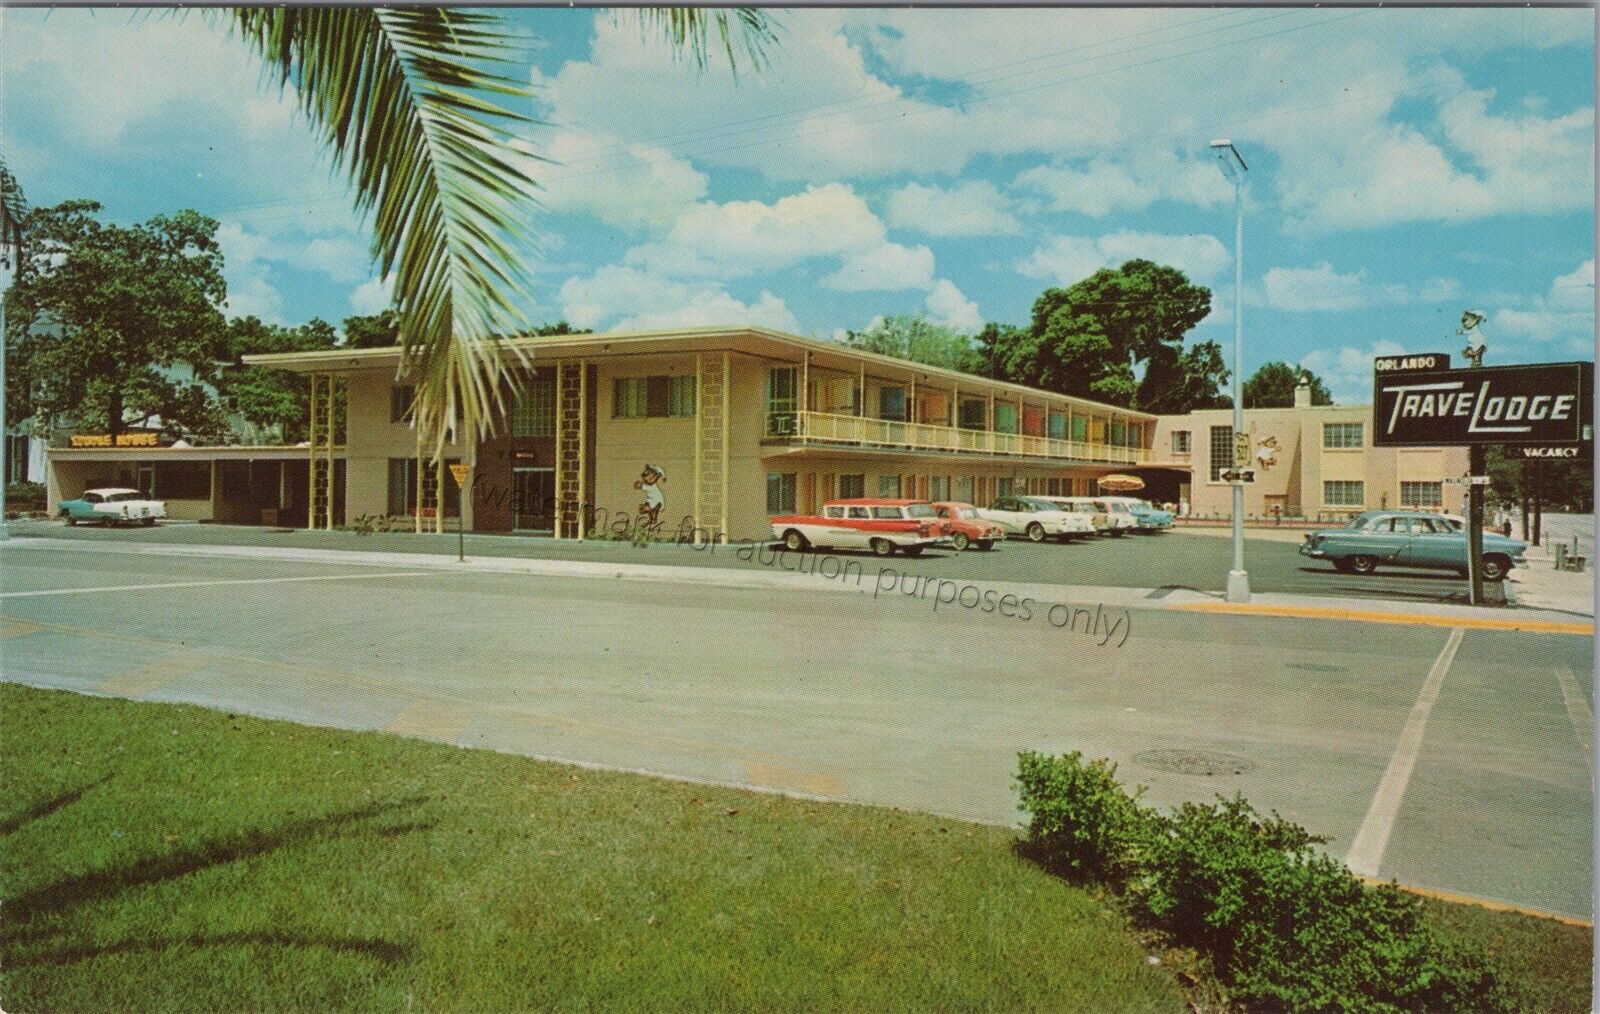 Orlando, FL: Downtown Orlando Travel Lodge - Vintage Florida Postcard